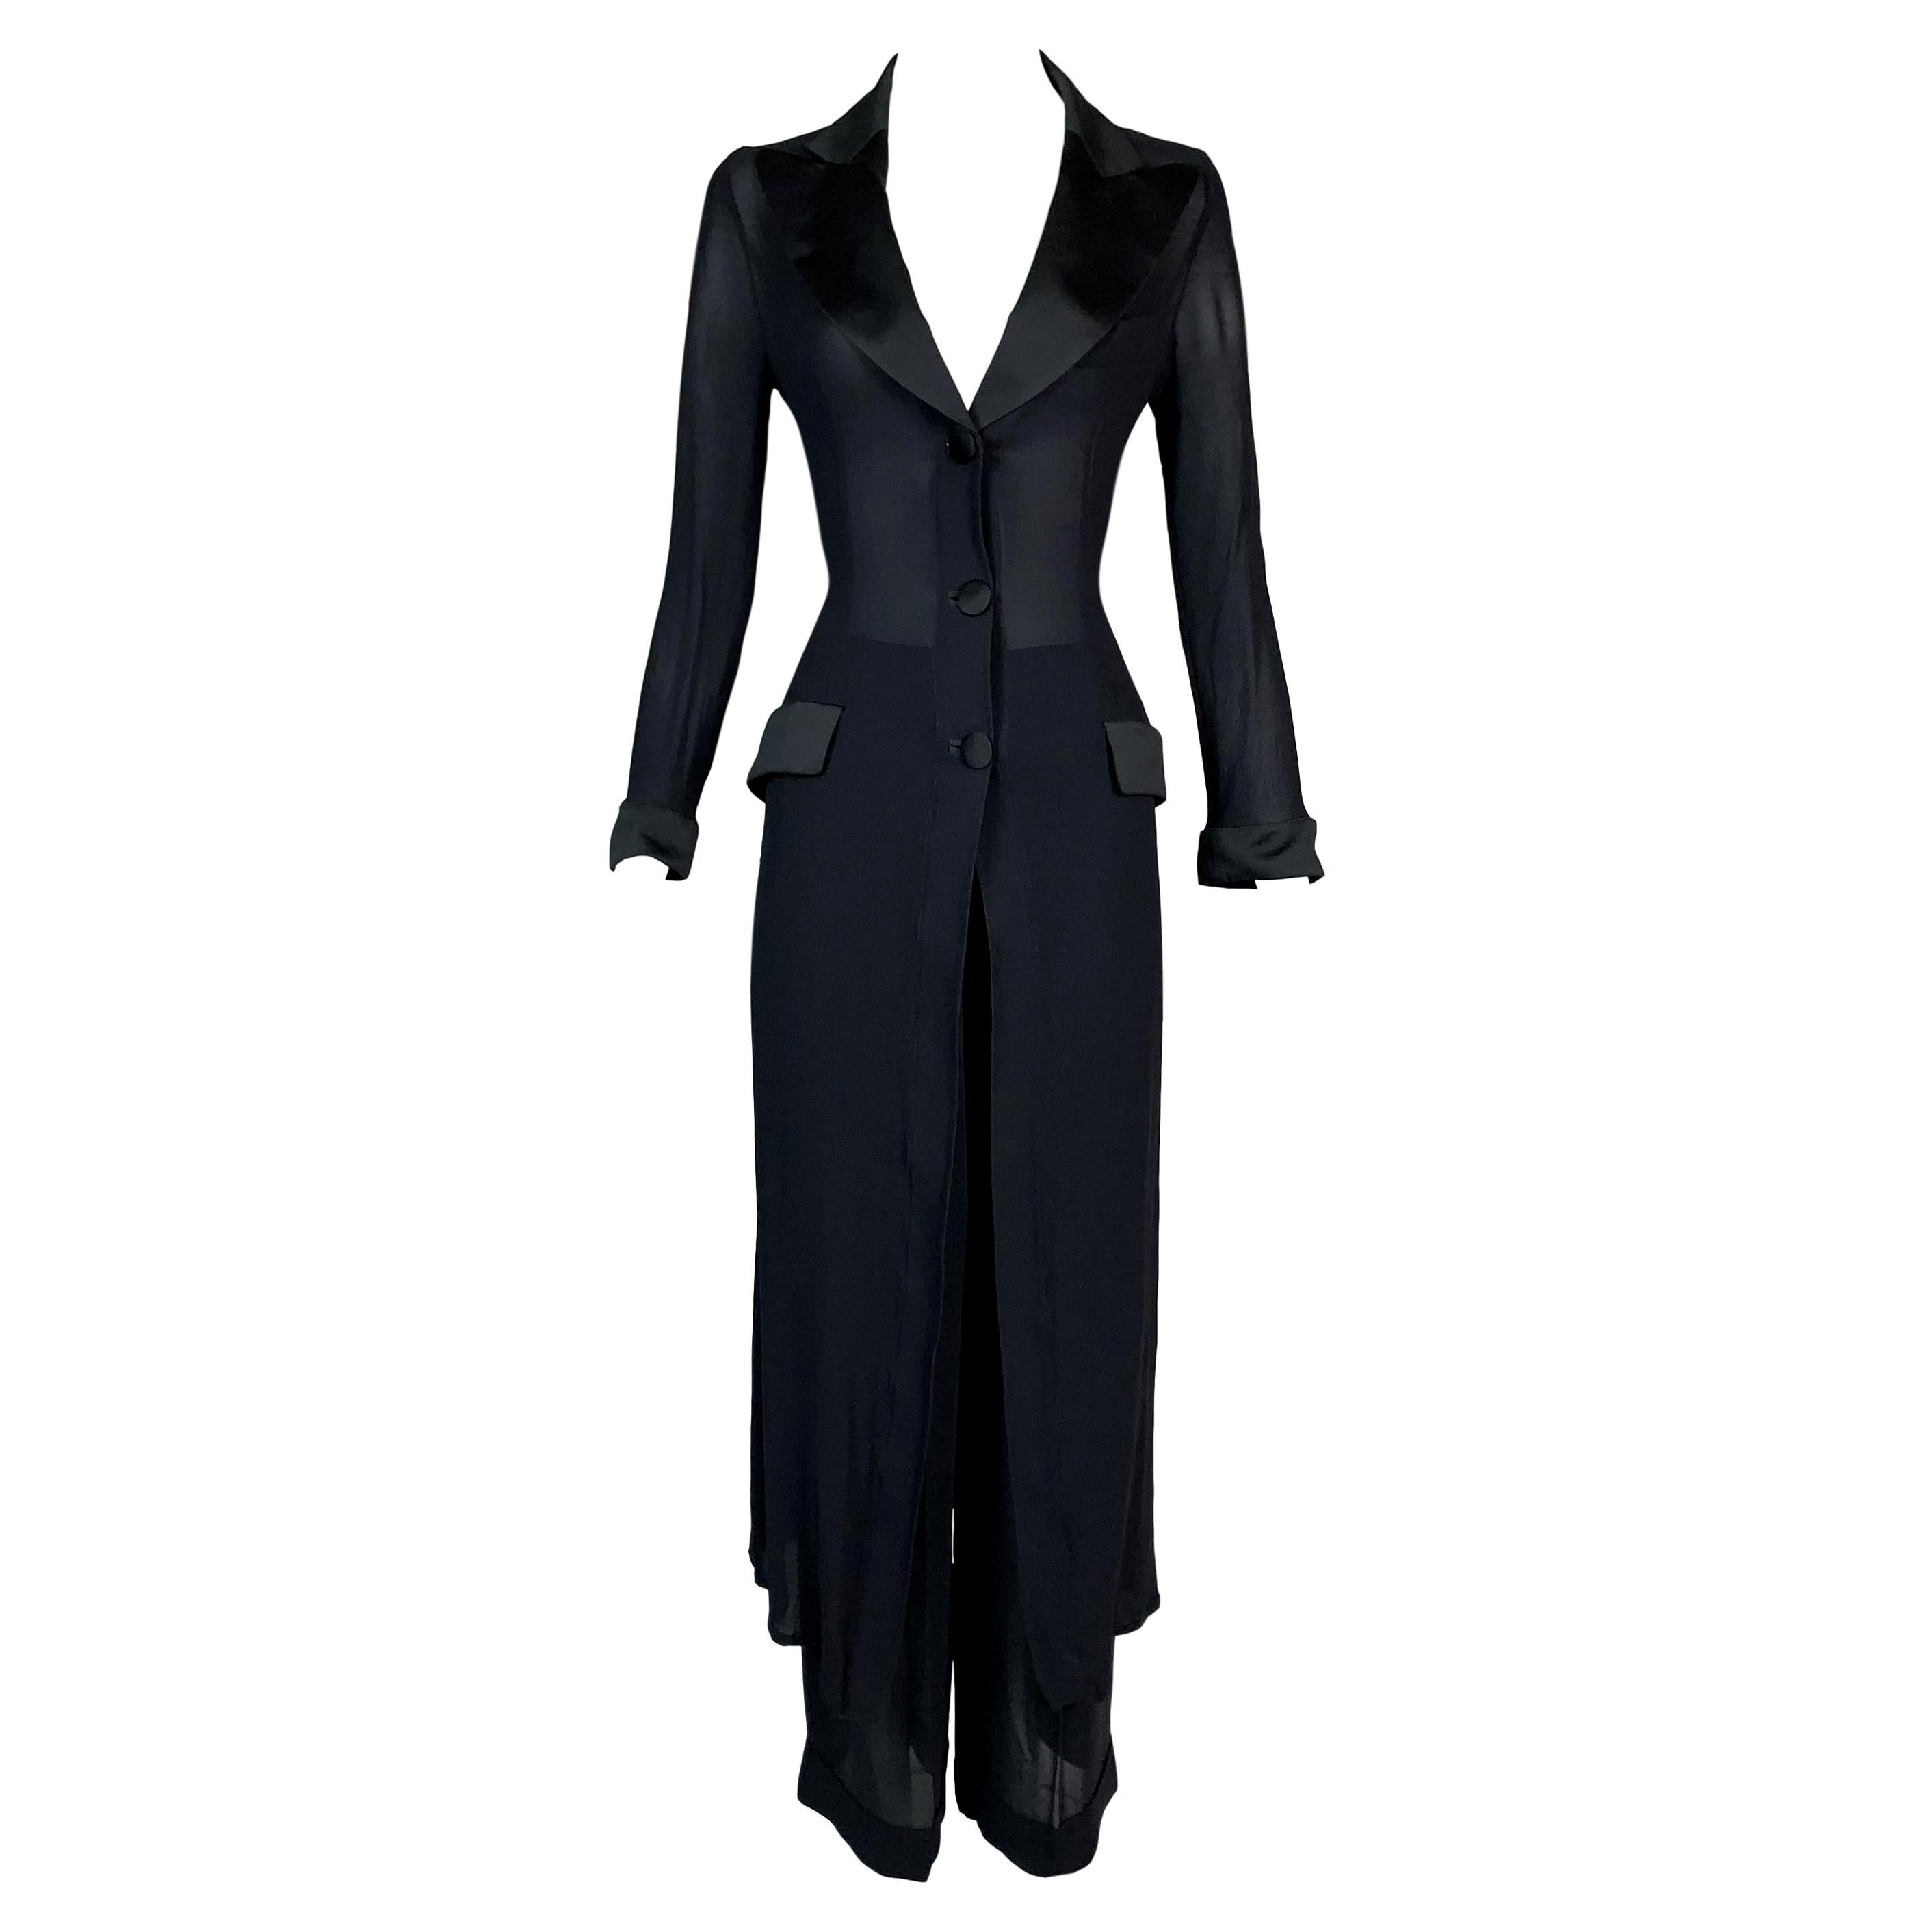 S/S 1995 Dolce & Gabbana Sheer Black Coat Dress & Pant Suit Set